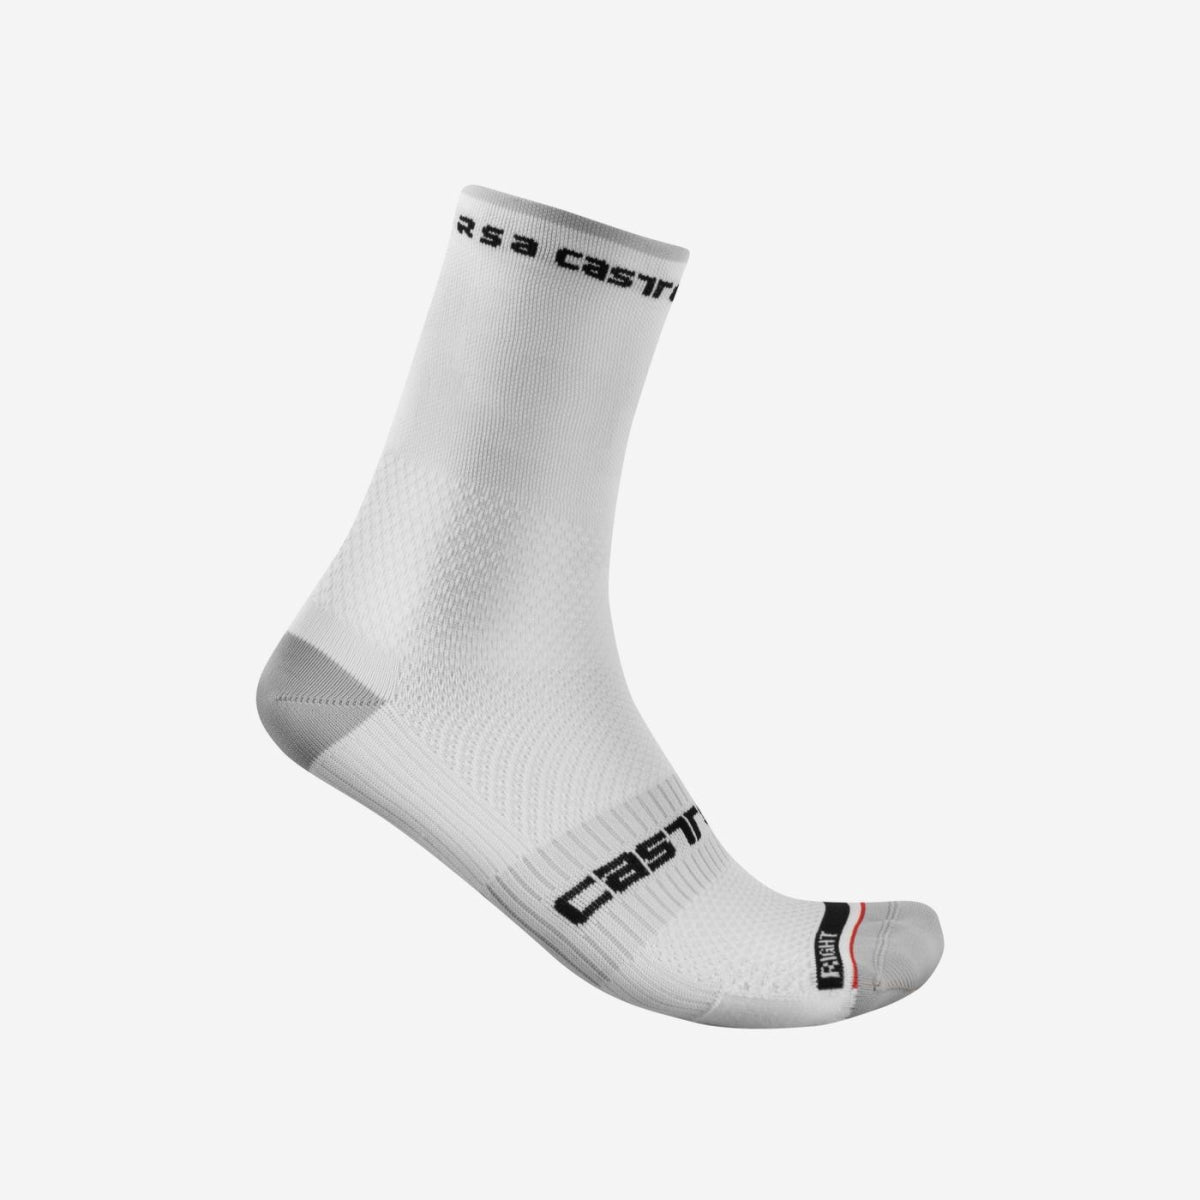 Castelli RC Pro 15 Mens Cycling Socks (White)